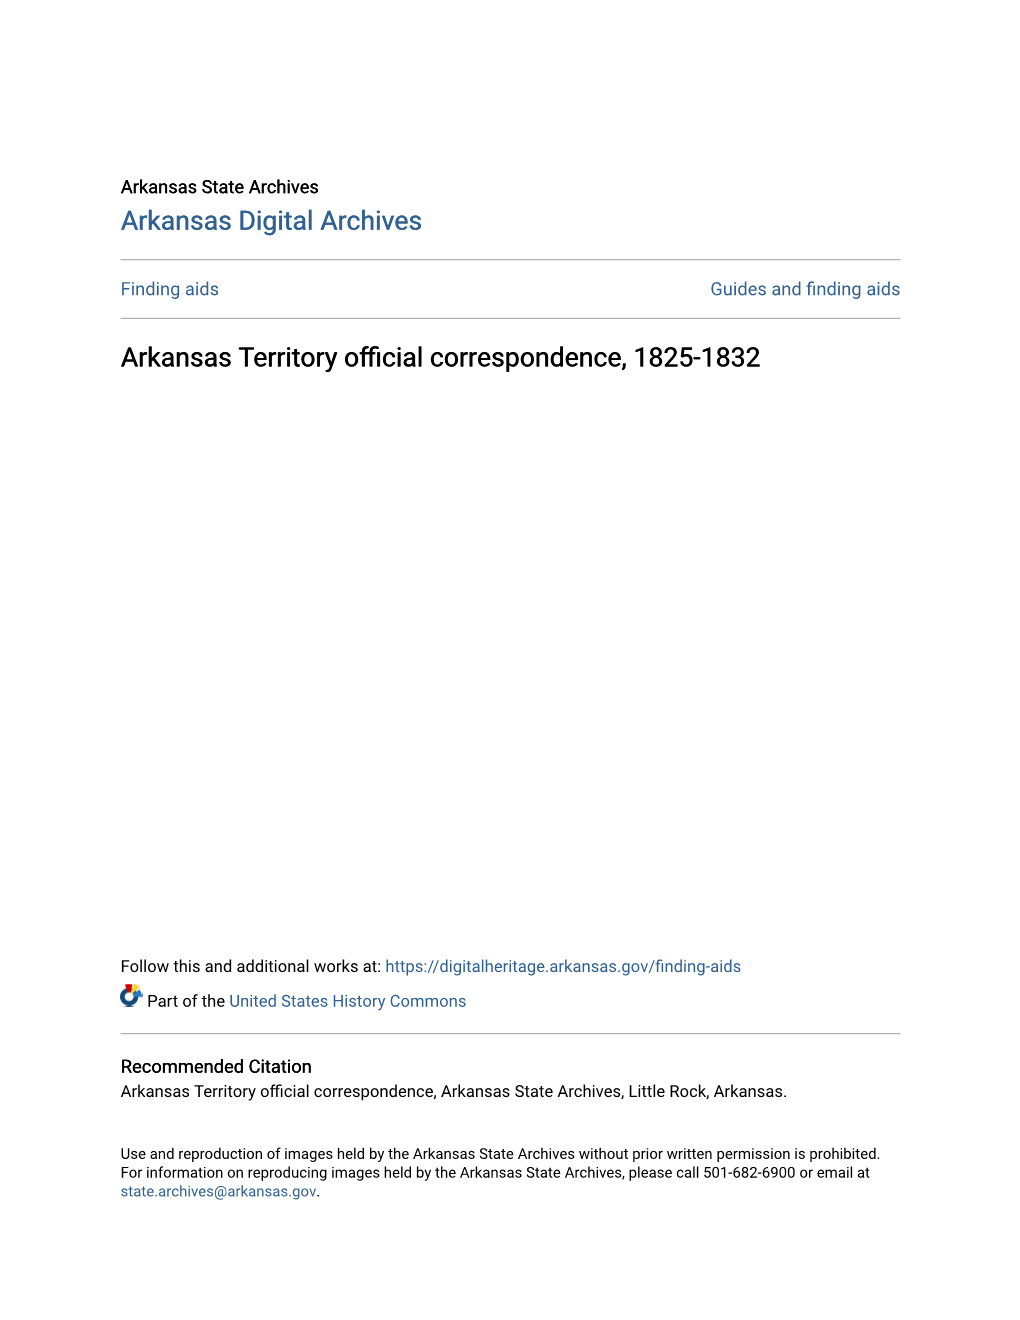 Arkansas Territory Official Correspondence, 1825-1832